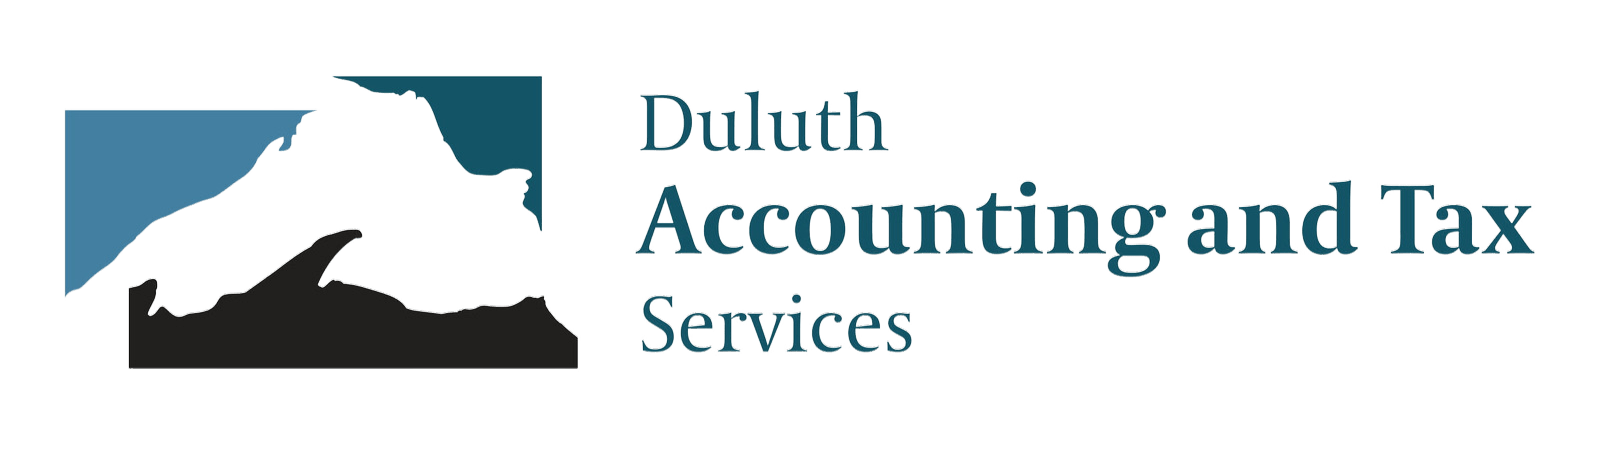 DuluthAccounting_LogoFullColor-1 - Edited